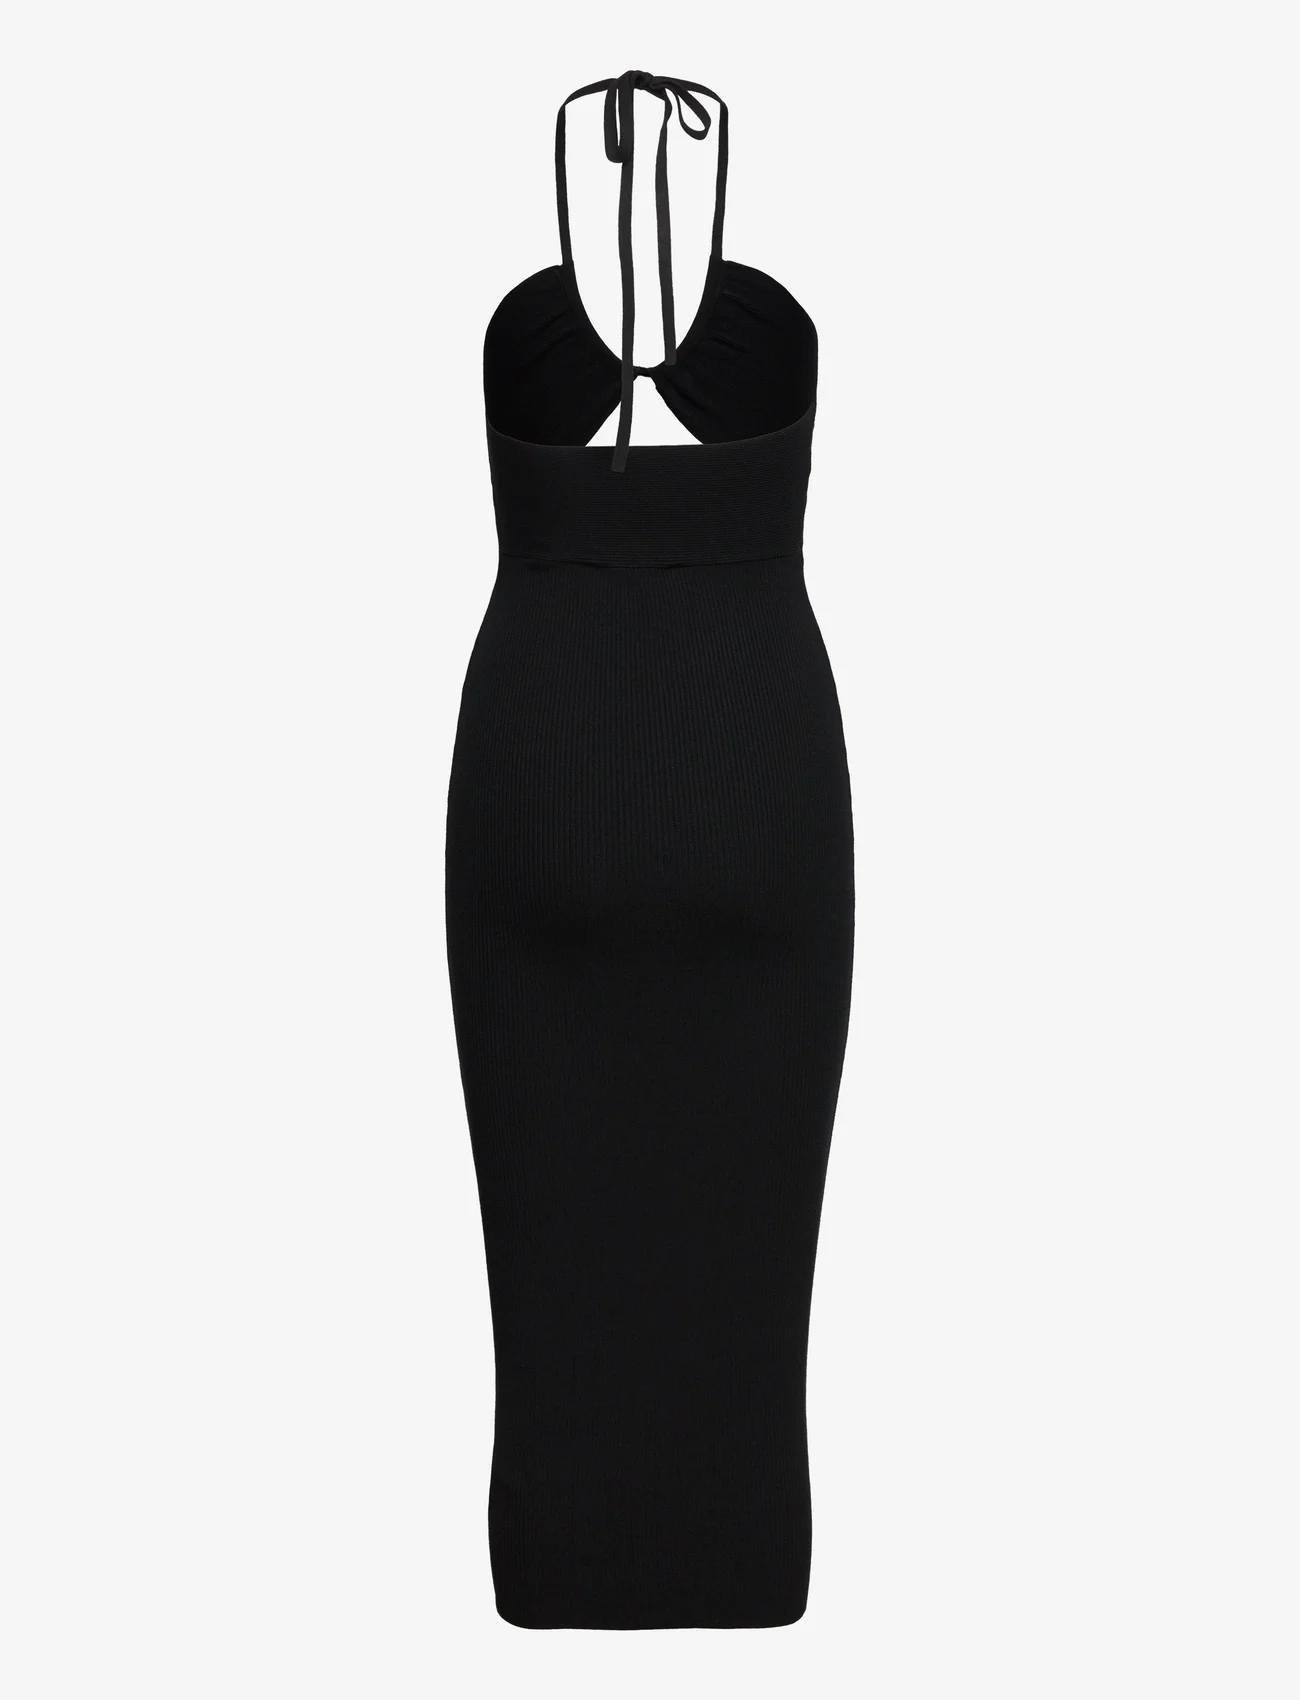 AllSaints - TONI DRESS - bodycon dresses - black - 1